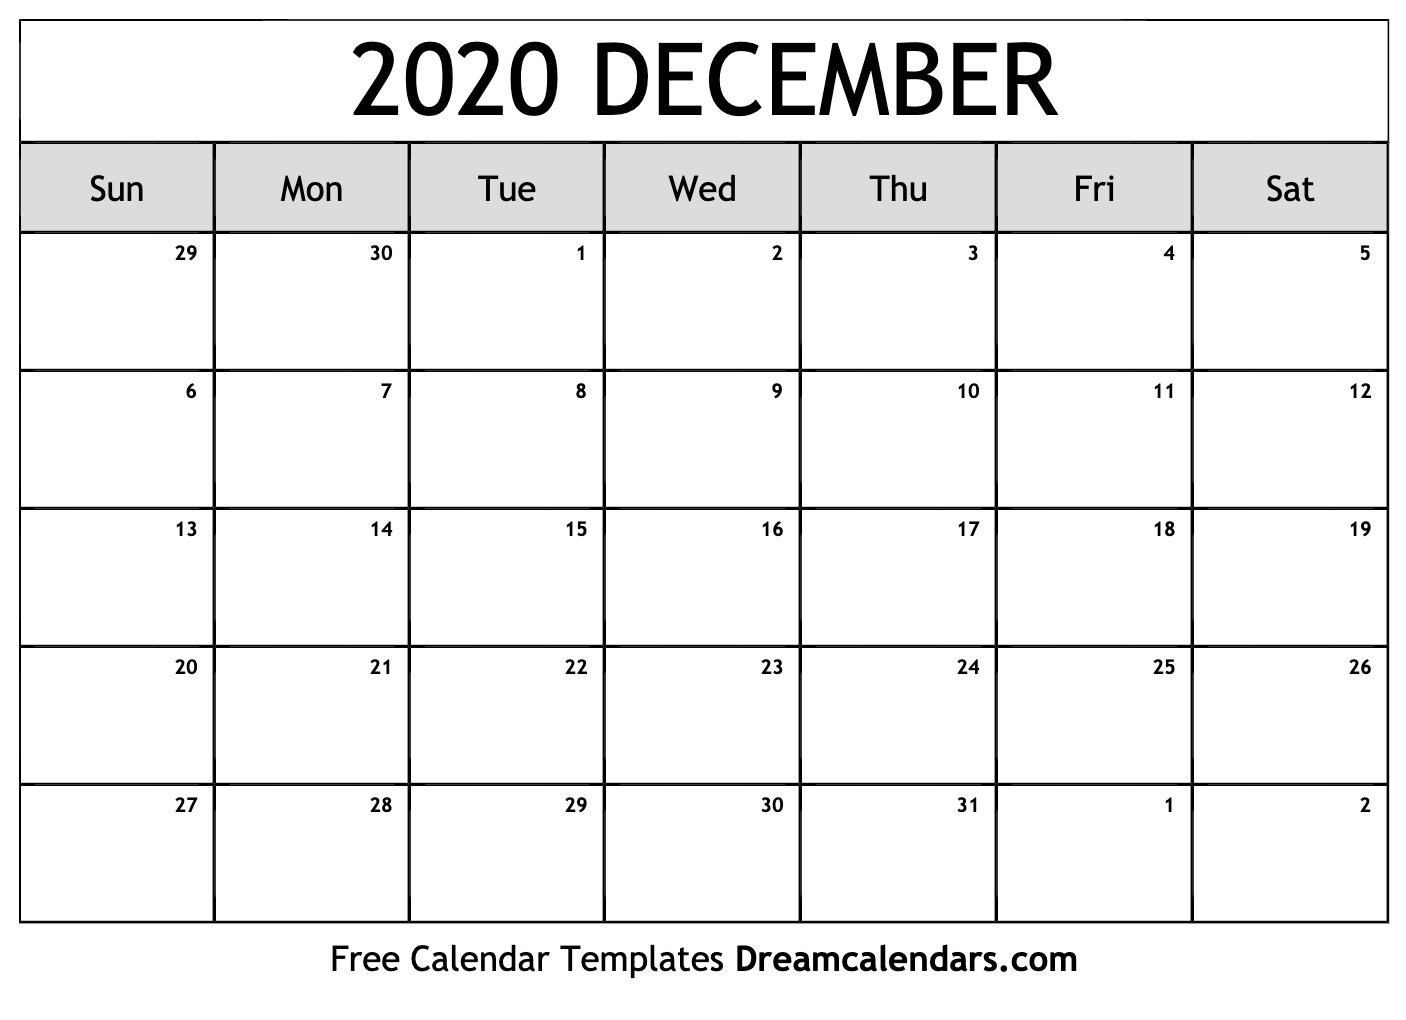 Month Of December 2020 Calendar - Monte-Blank Calendar December 2020 Letter Size